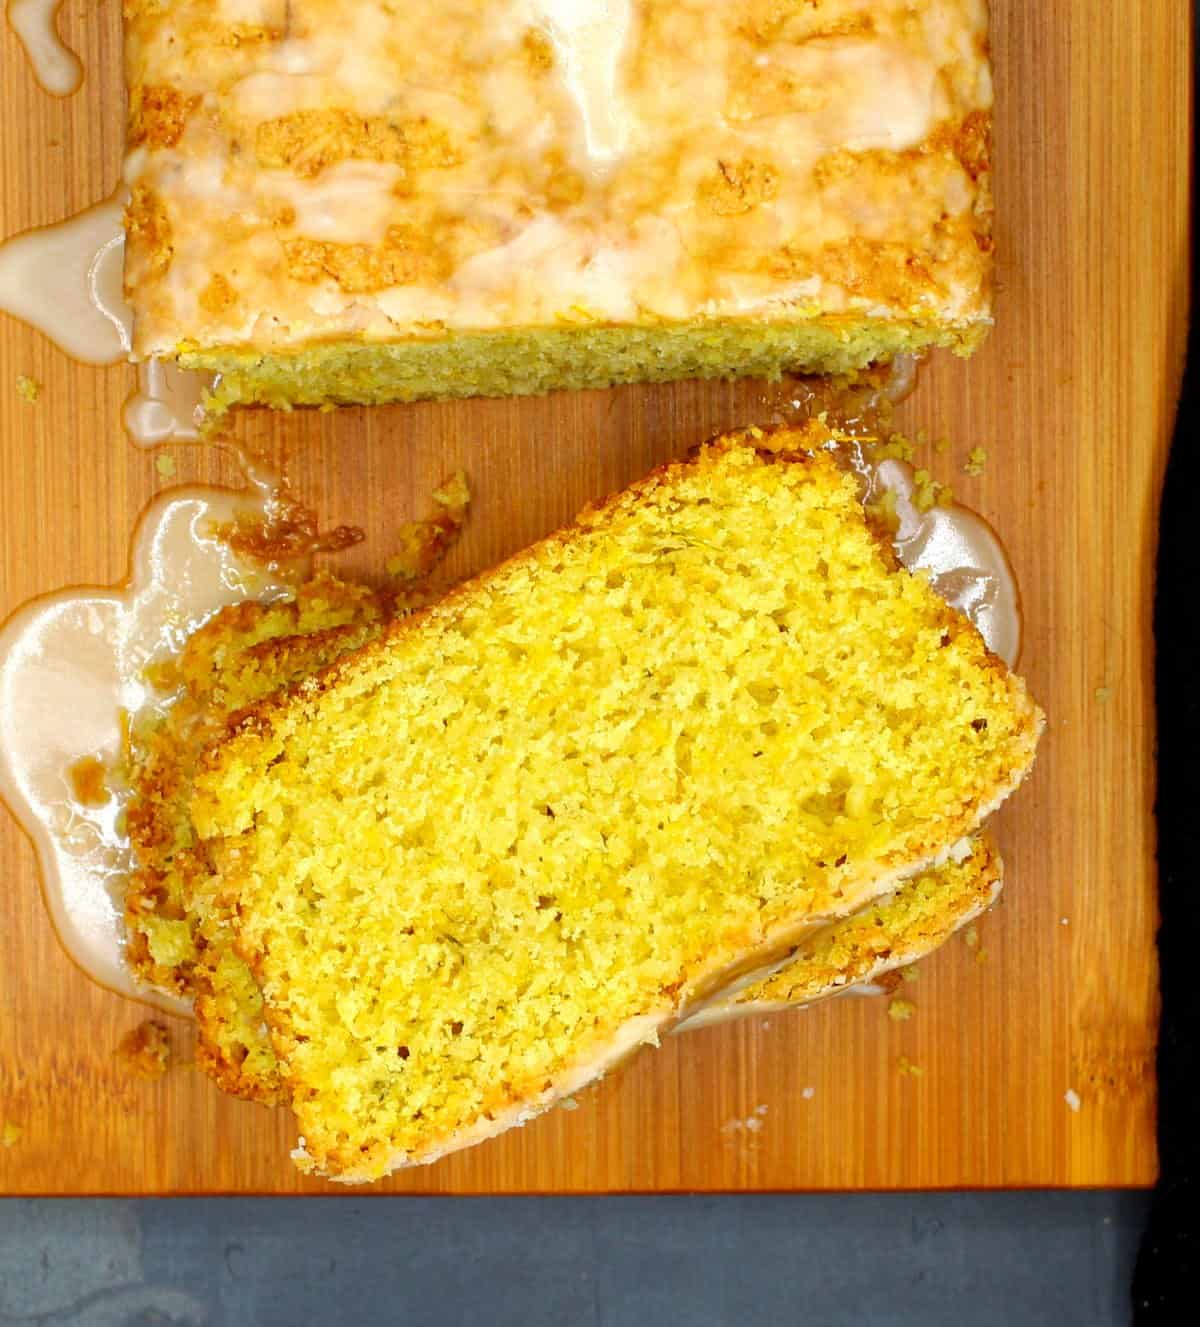 Slices of vegan dandelion bread on chopping board.